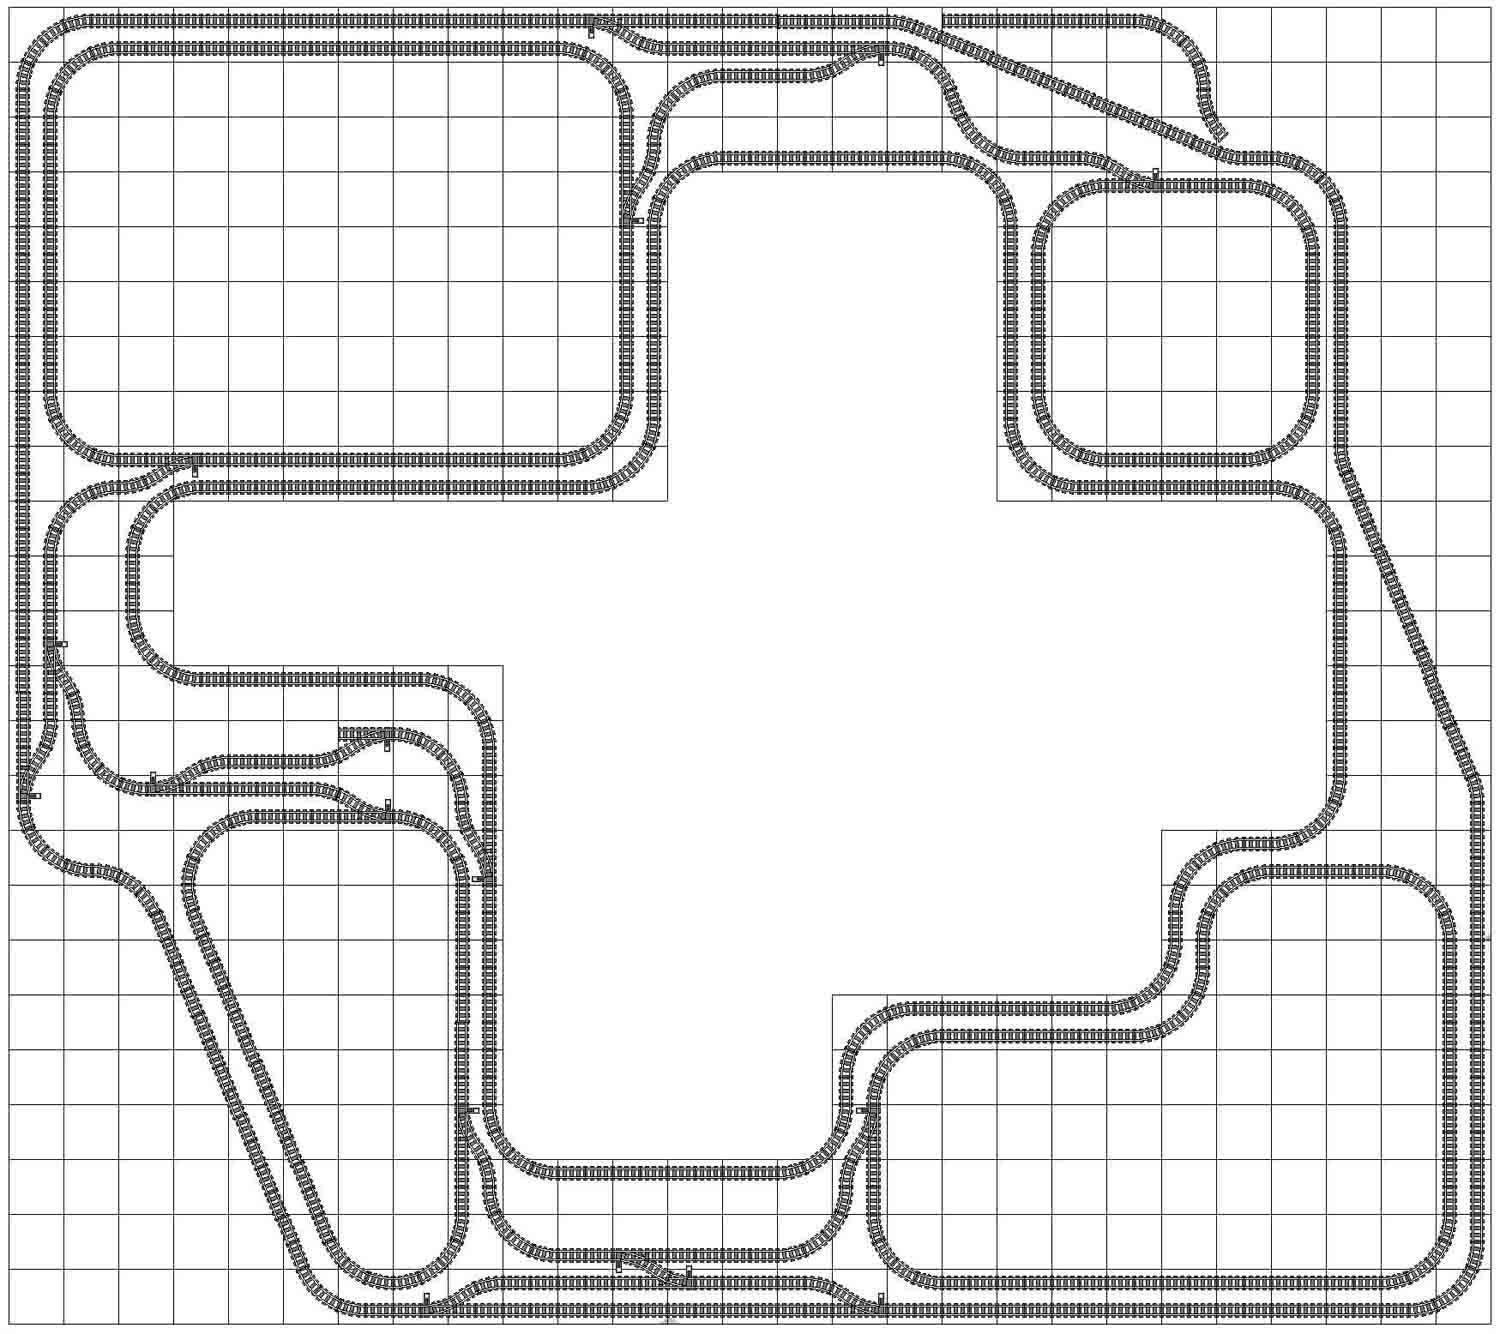 lego train track layout ideas